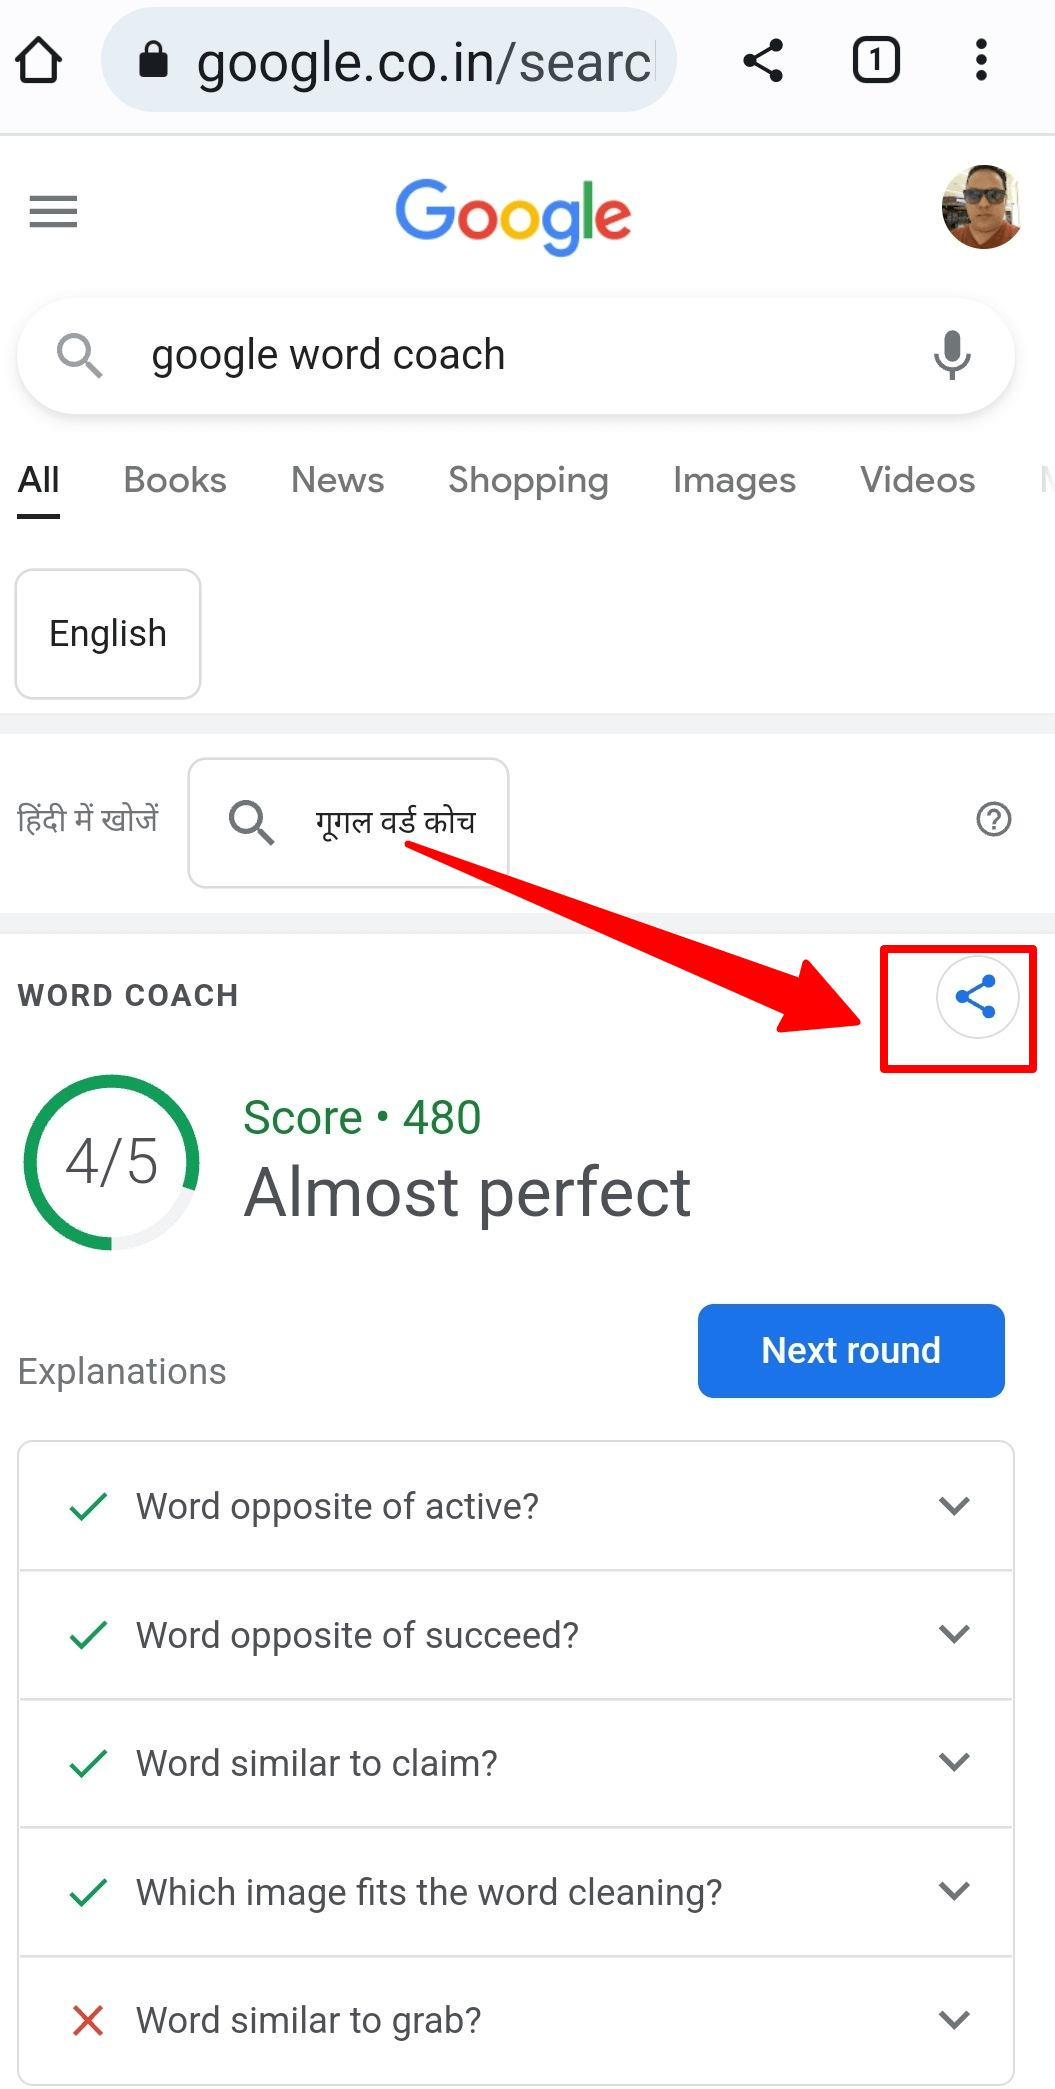 Google word coach score share